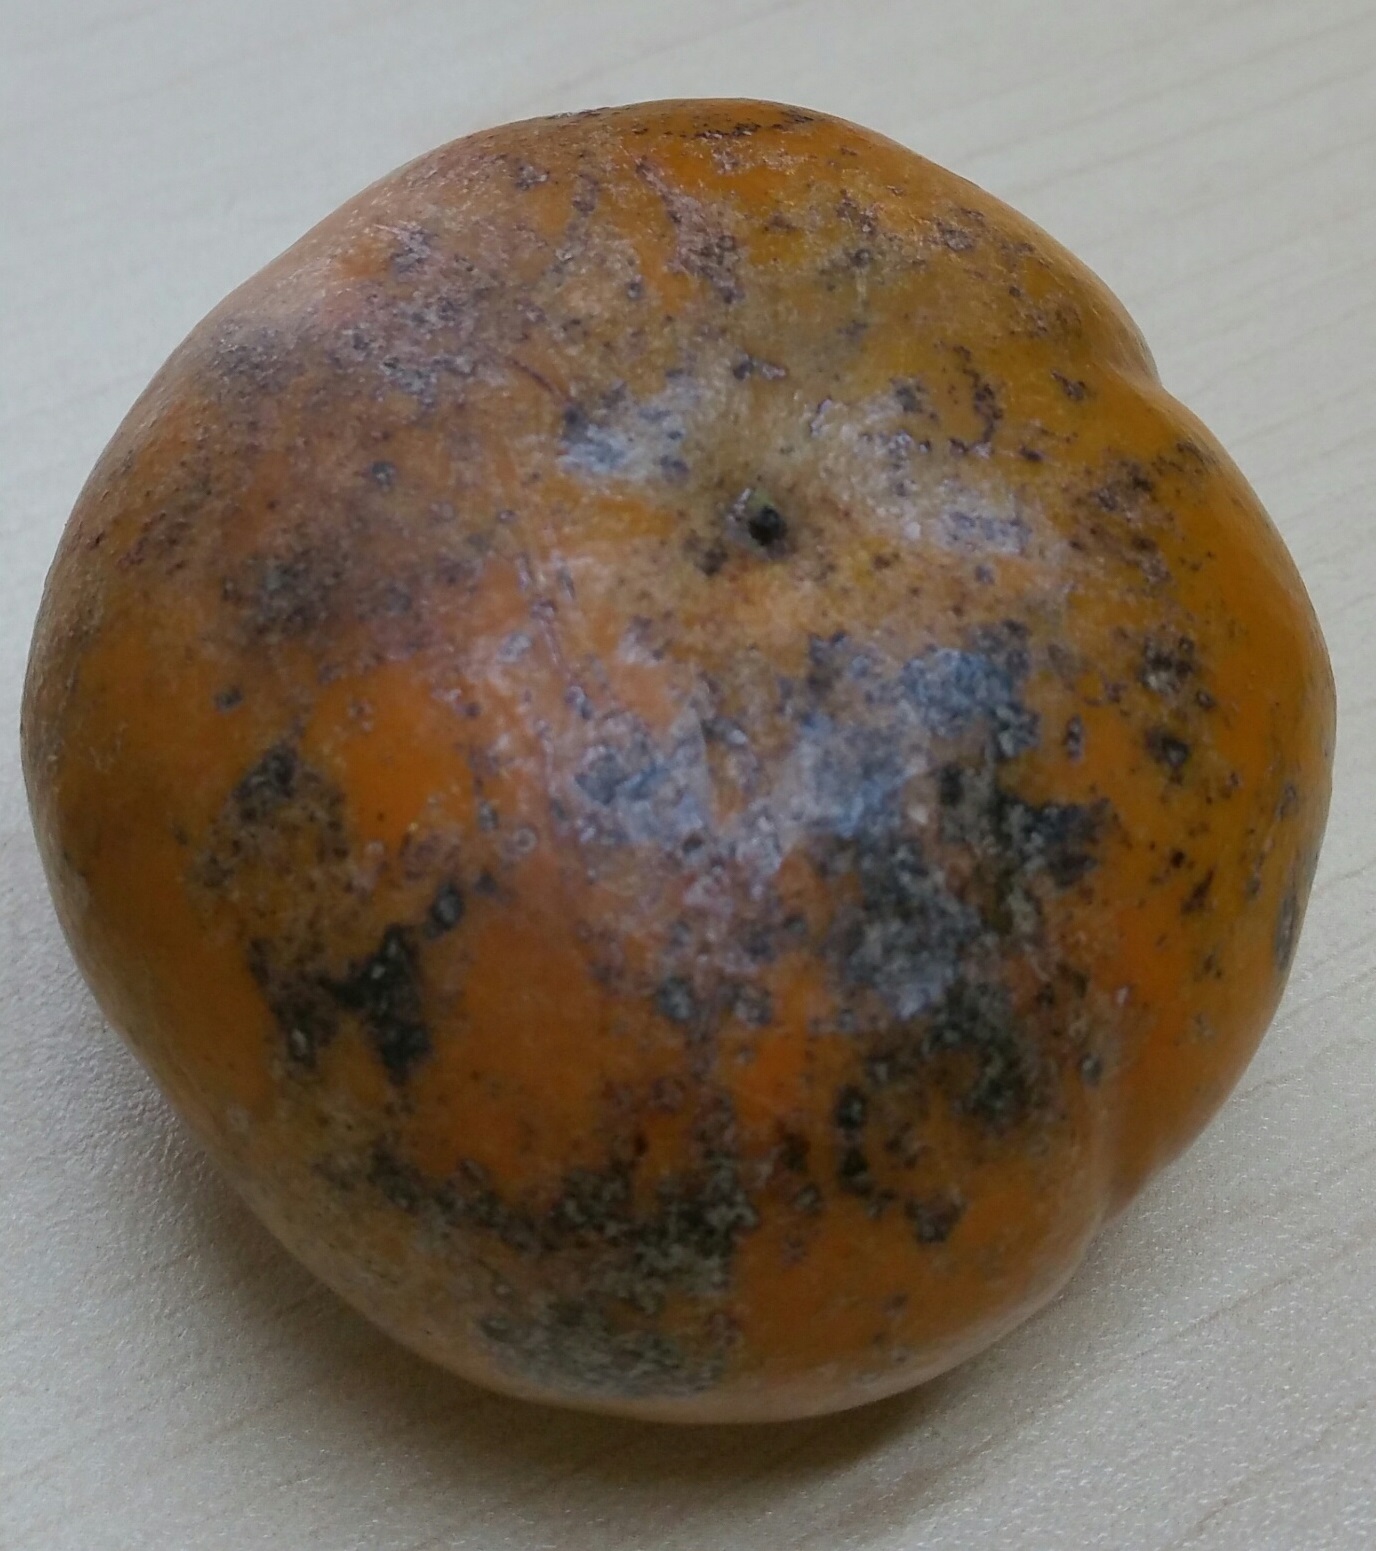 Rotten Mango Fruit On Image & Photo (Free Trial)